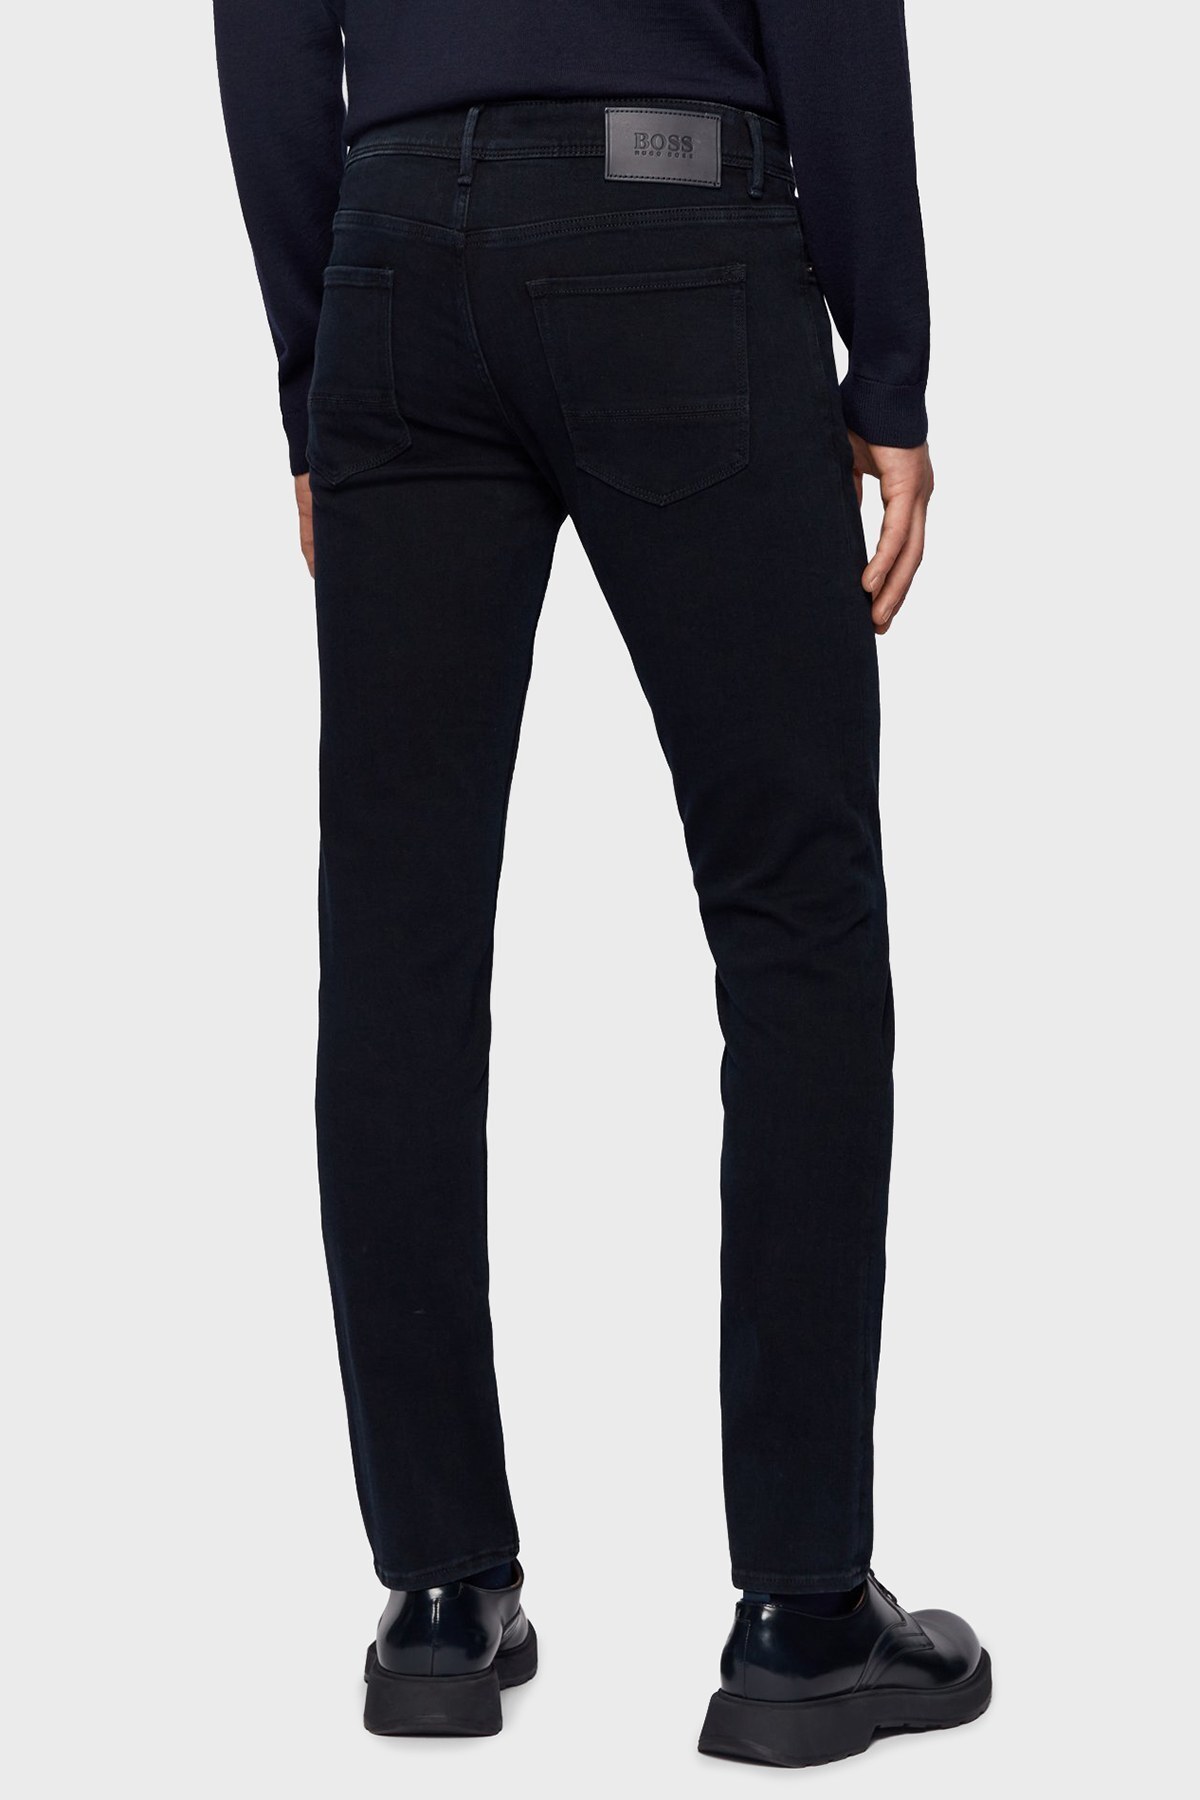 Hugo Boss Düşük Bel Extra Slim Fit Cepli Pamuklu Jeans Erkek Kot Pantolon 50458143 400 LACİVERT